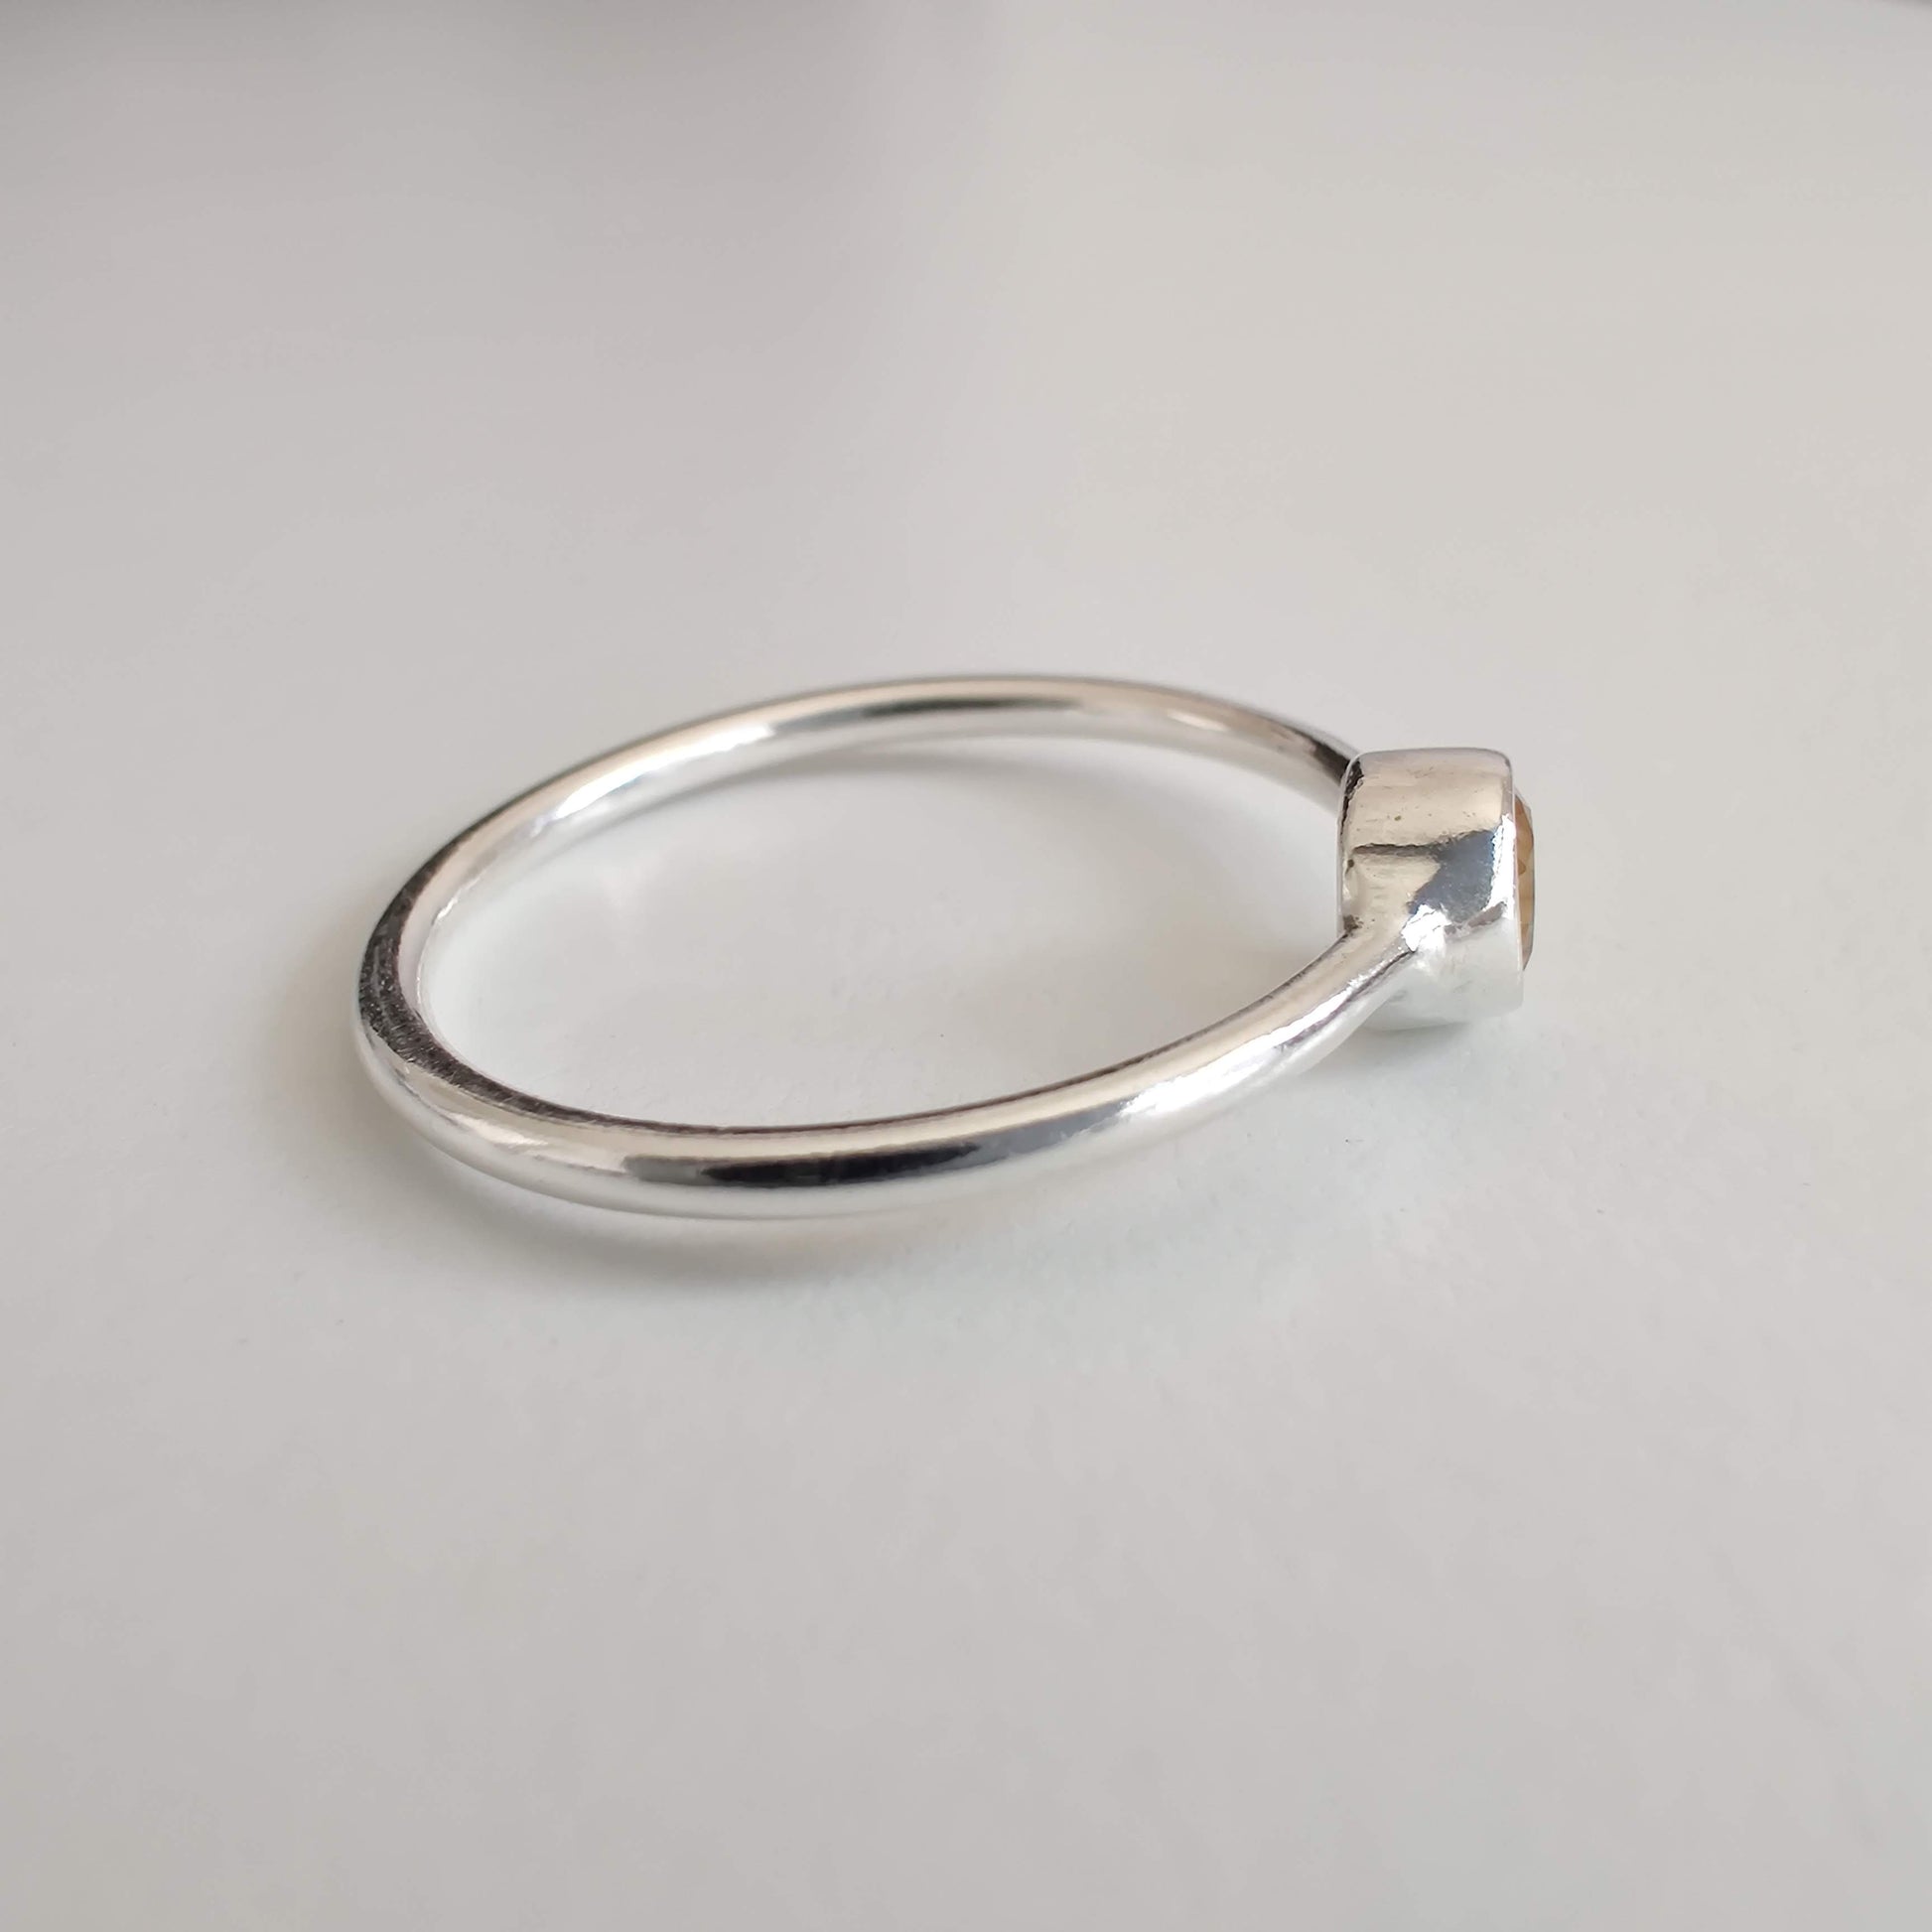 Citrine Delicate 925 Sterling Silver Ring - Rivendell Shop